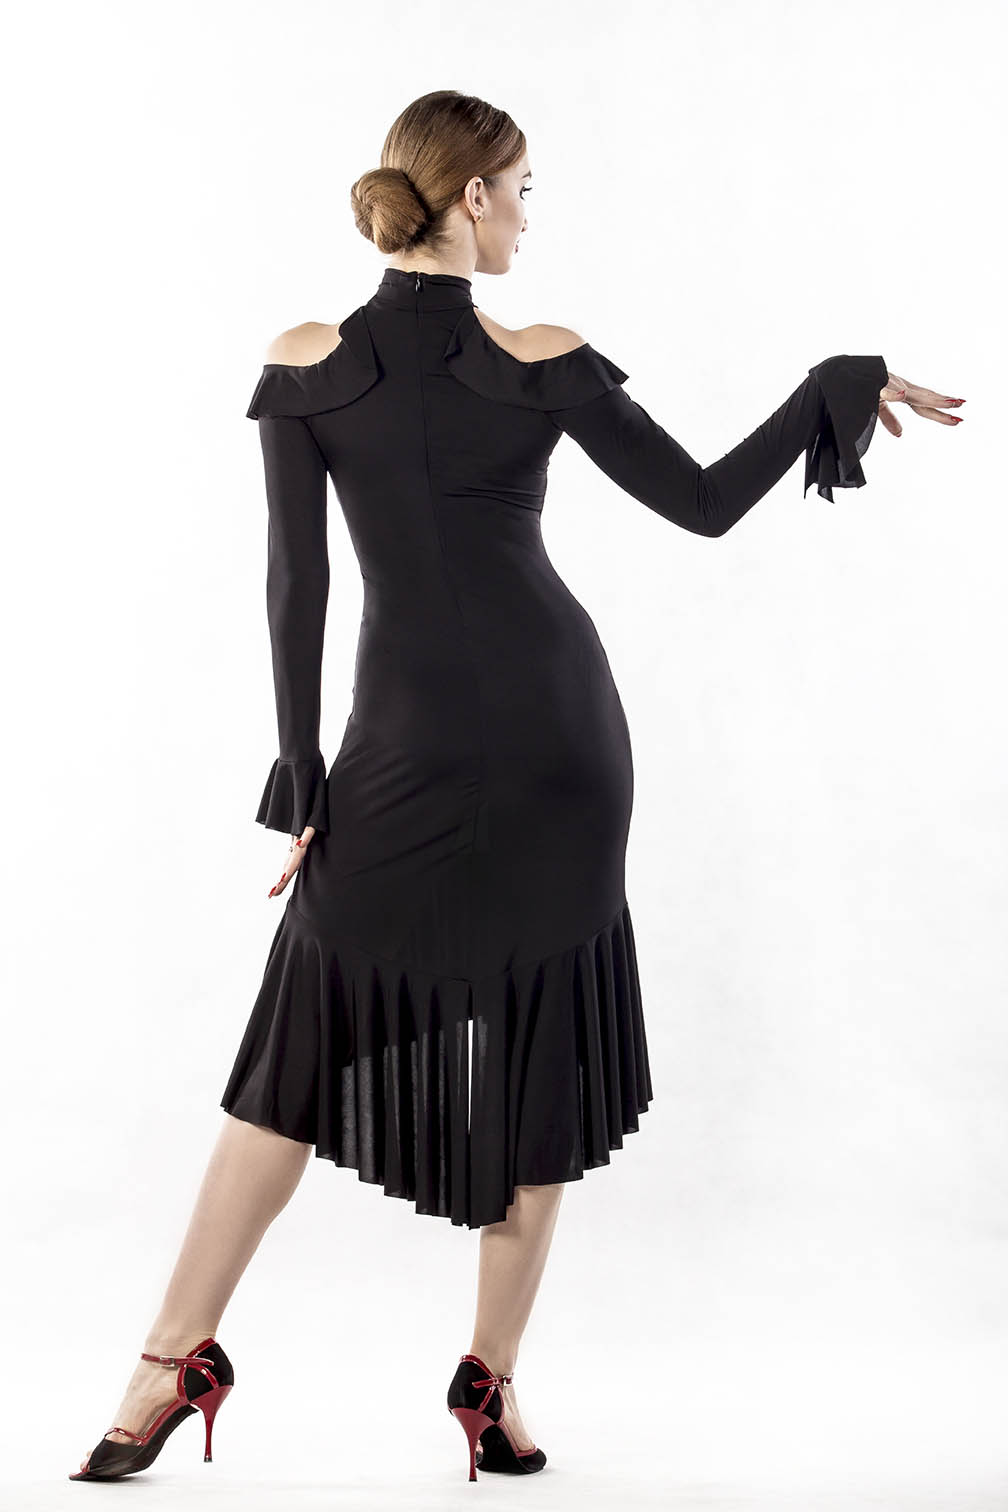 Flamenco Dress Black / P16120026-01 | DANCEBOX